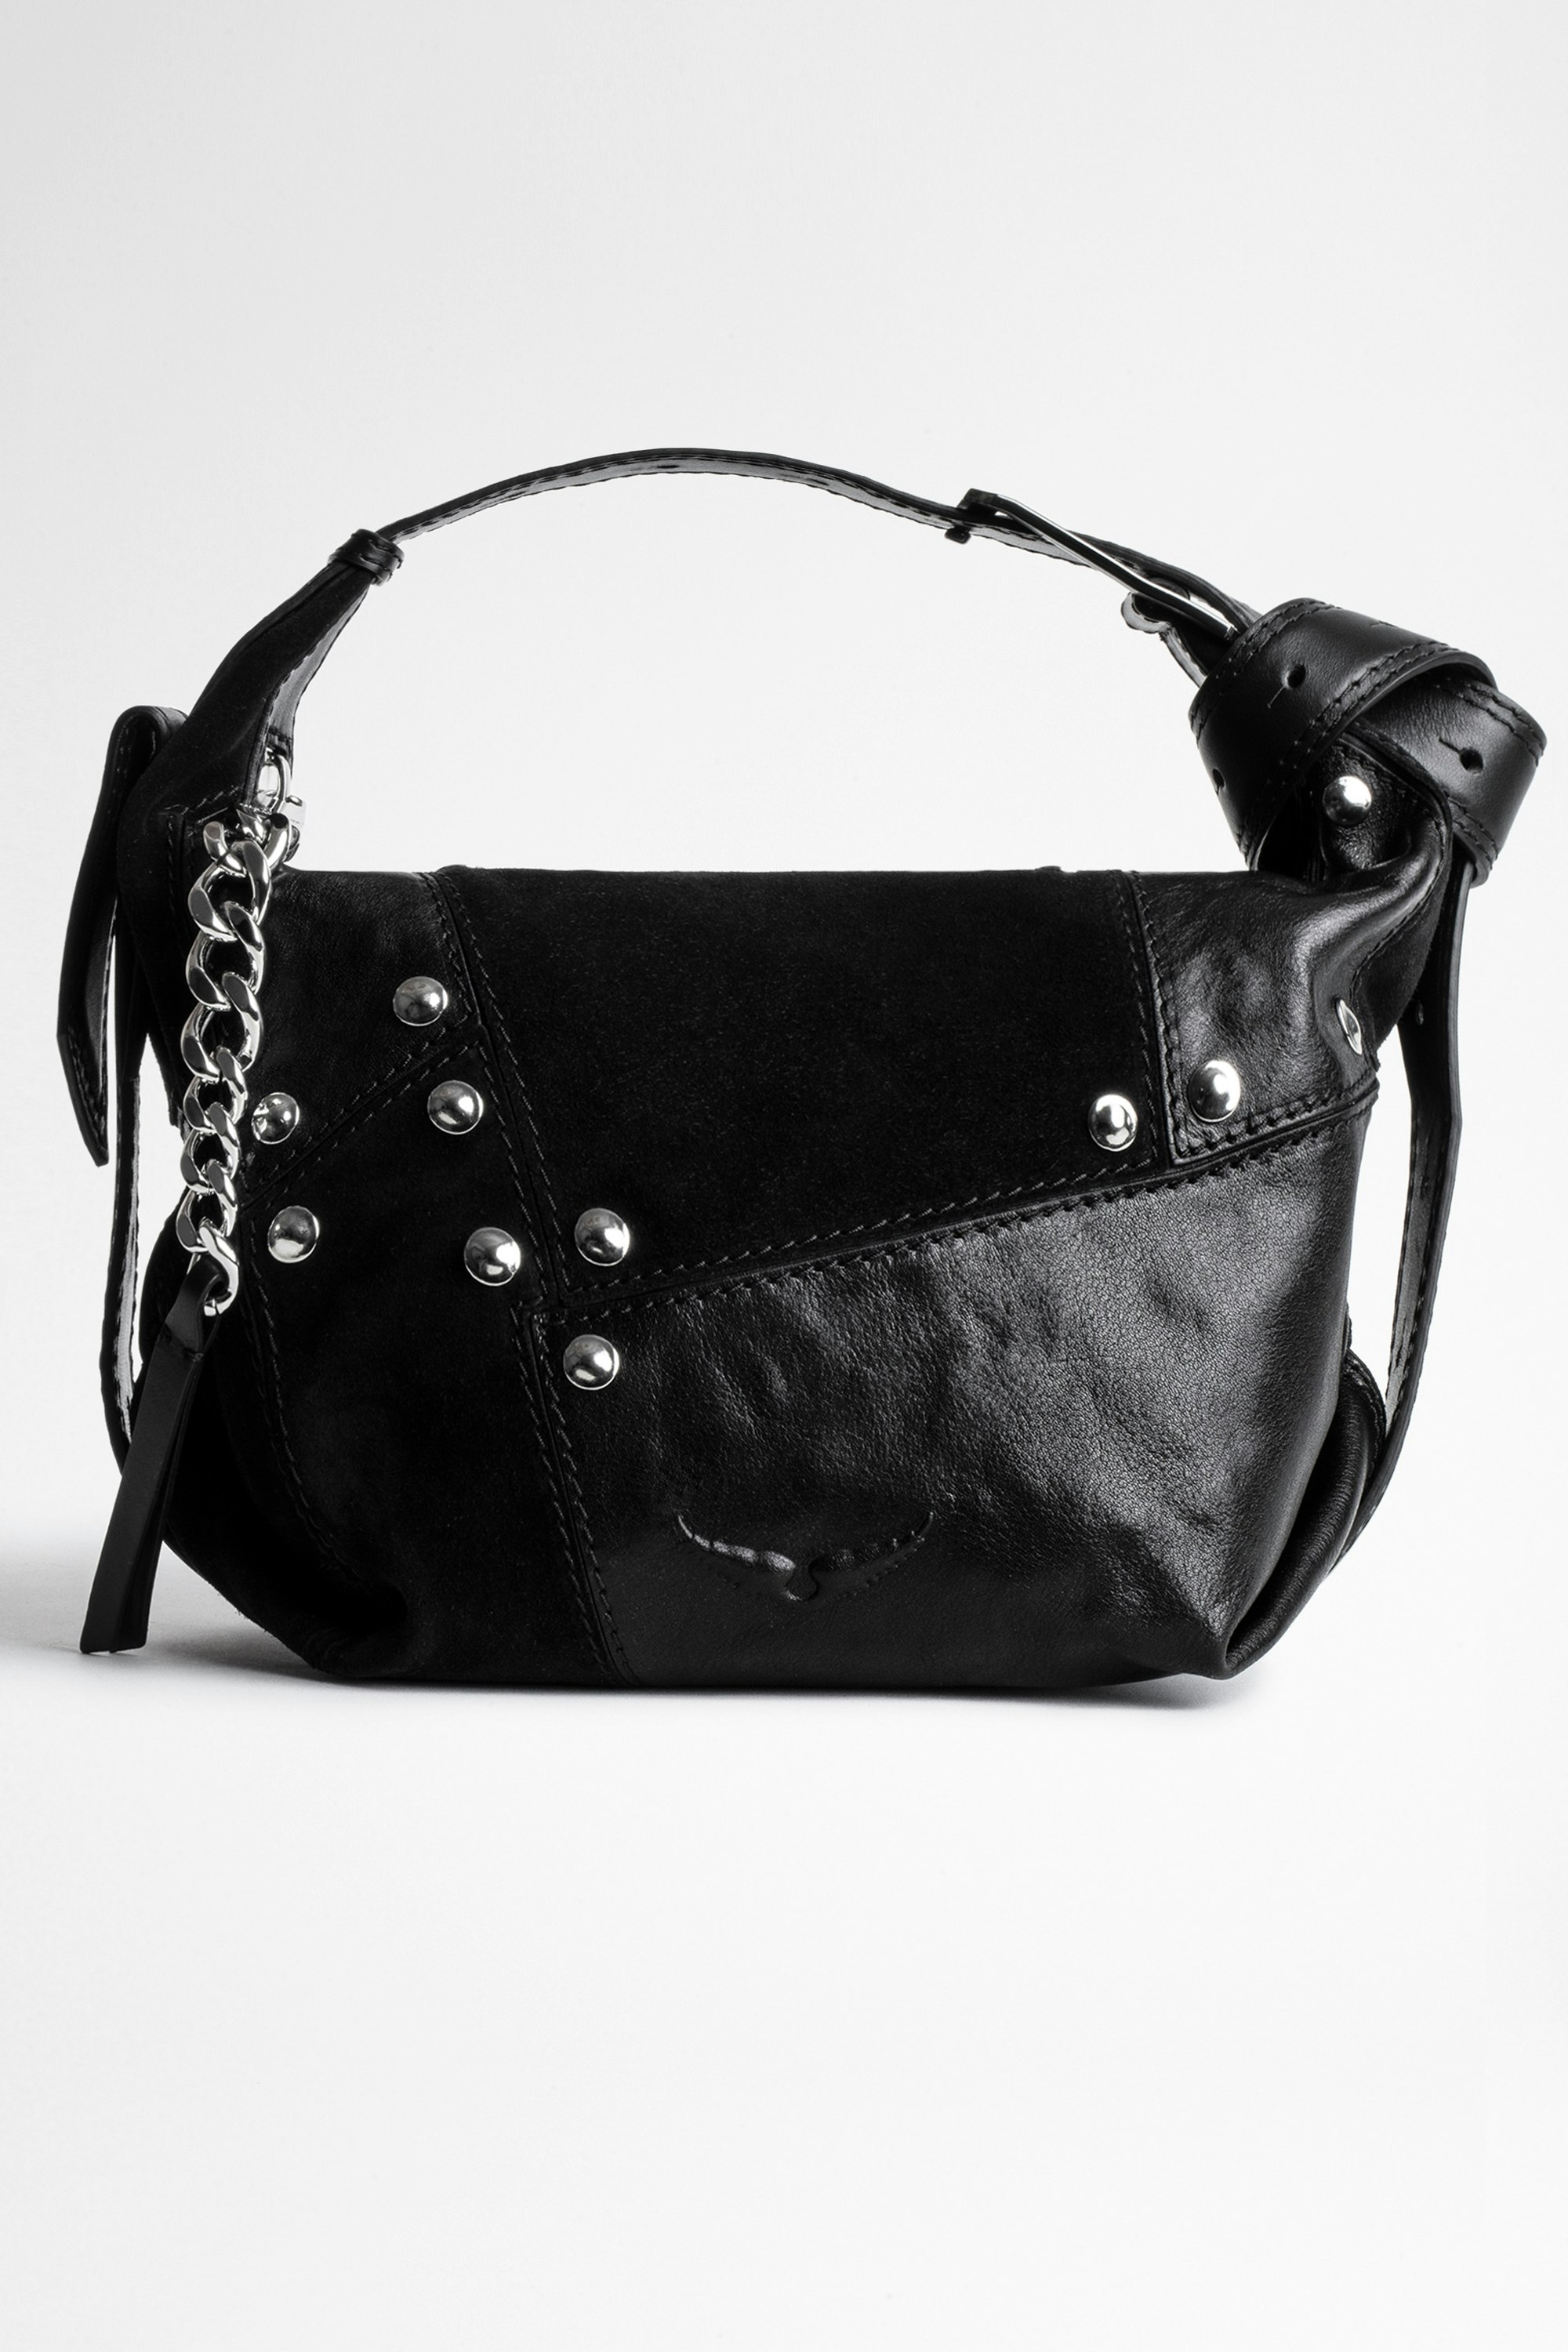 Le Cecilia Patchwork Studs バッグ Women’s Le Cecilia black patchwork leather bag